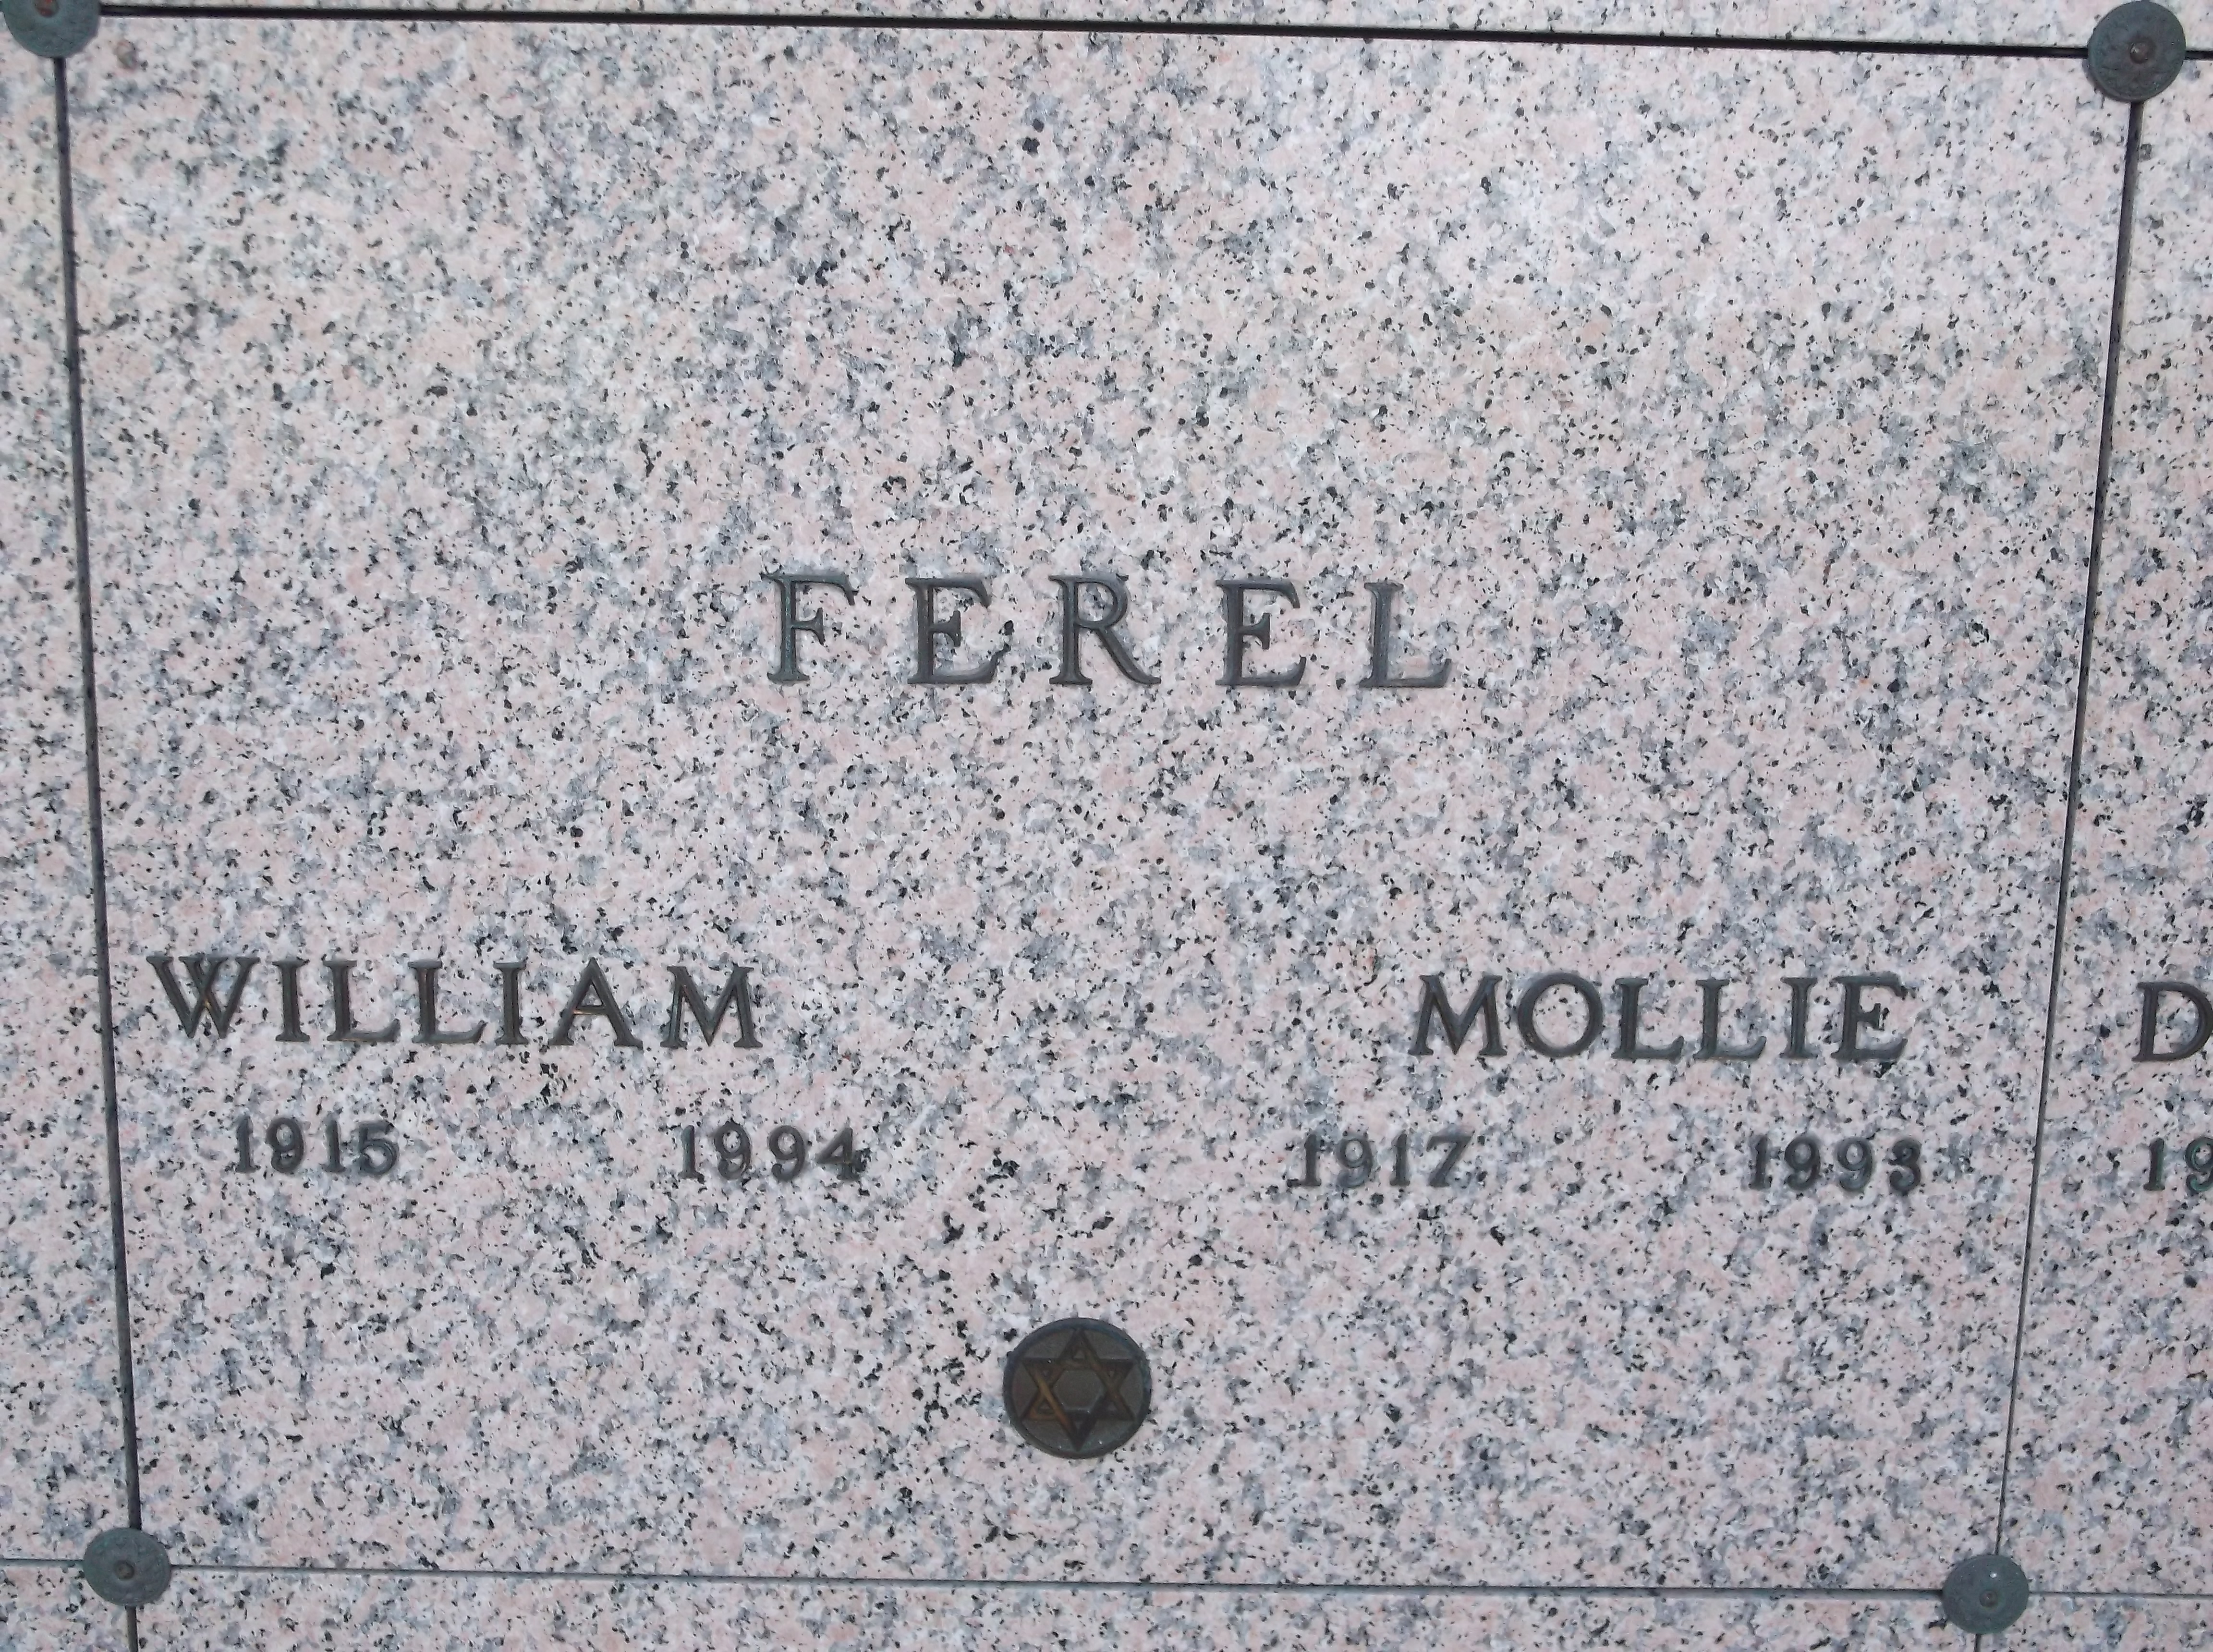 Mollie Ferel